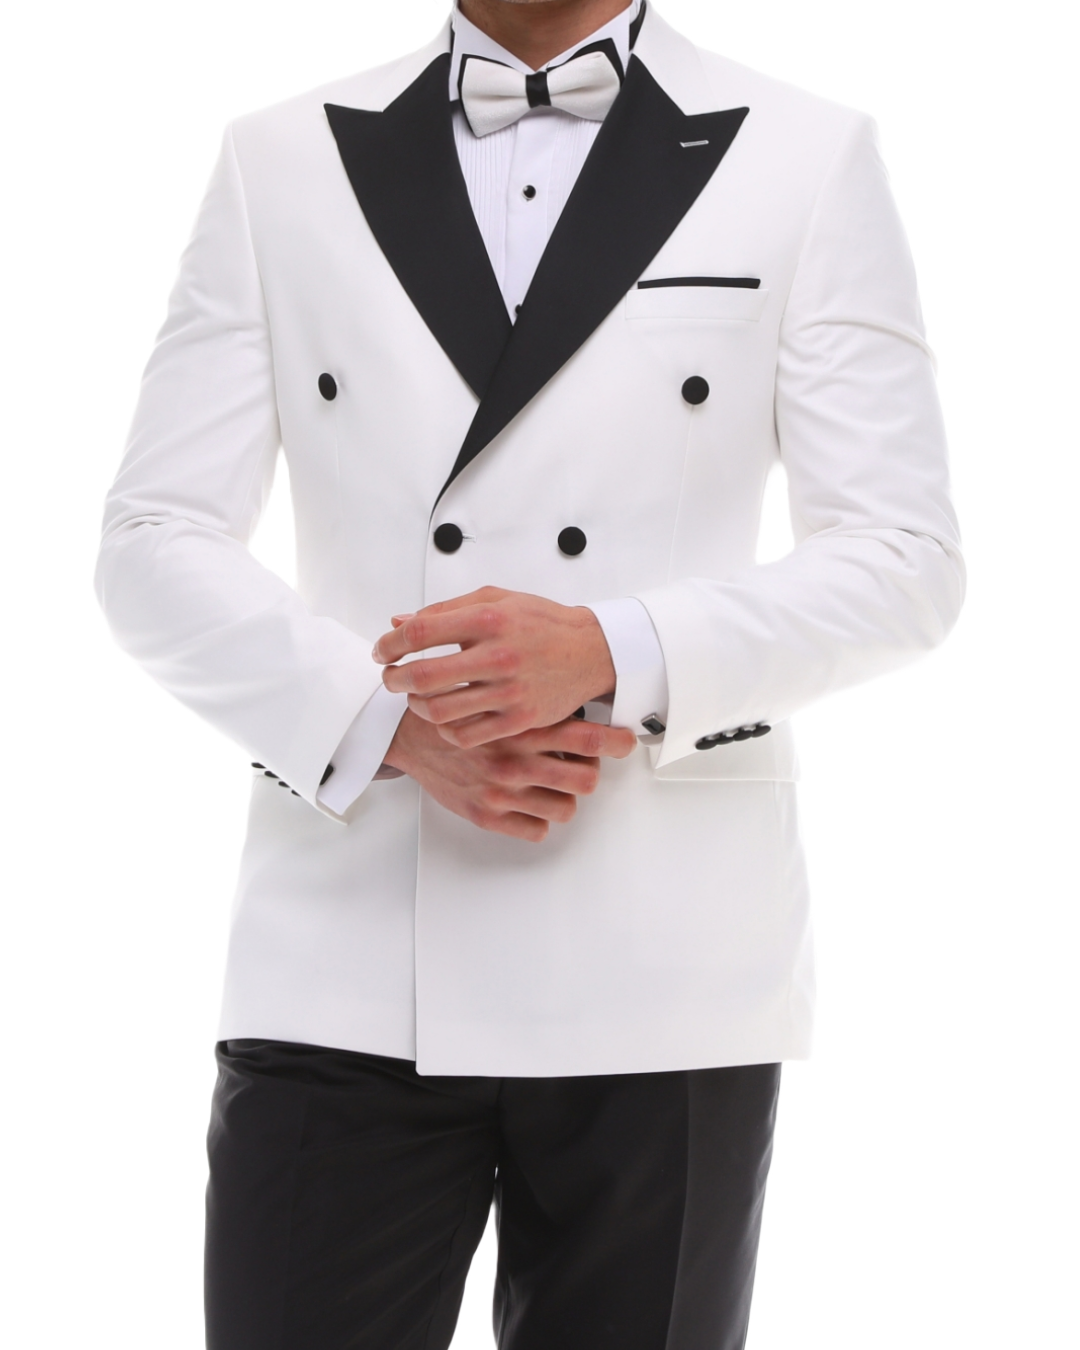 ANTIQUE PURE DOUBLE BREASTED - White & Black Satin Three Piece Tuxedo